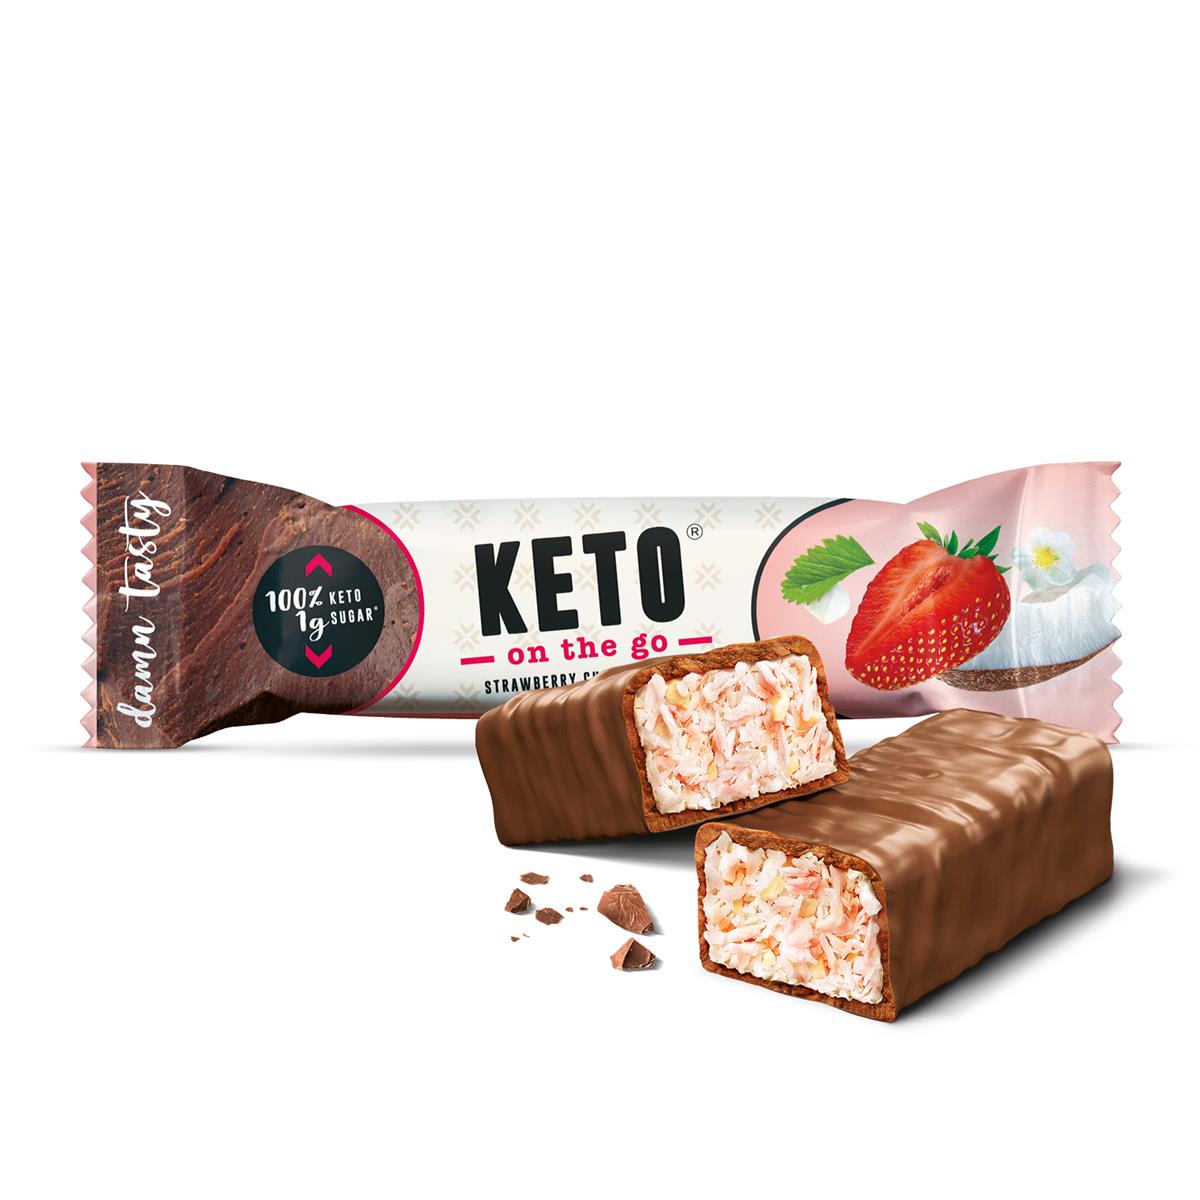 KETO on the go Strawberry Chocolate Bar_EUR 1,49_2